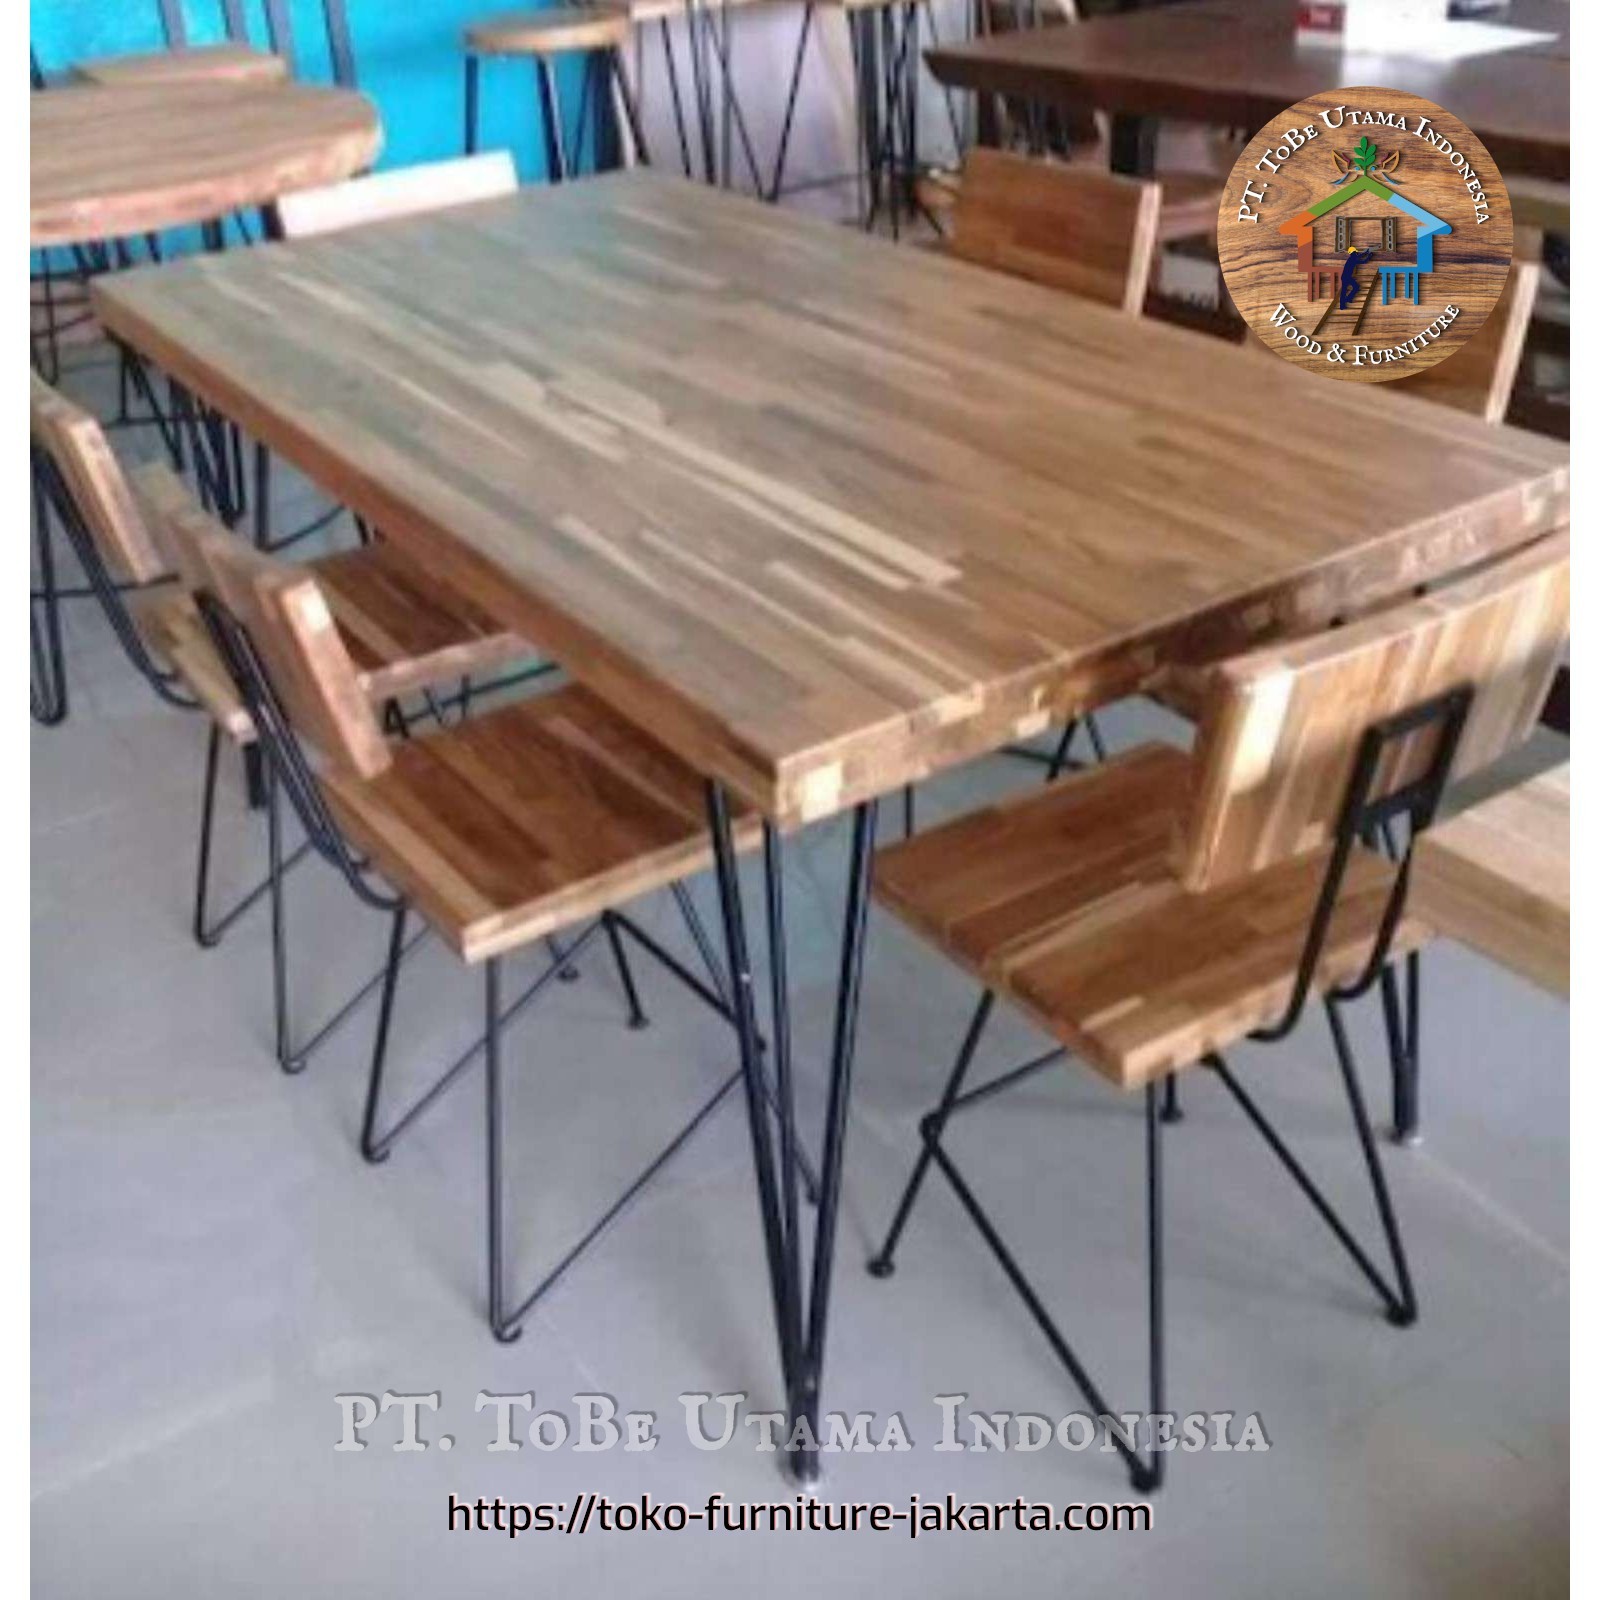 Dining Room - Dining Tables: Teak Block Dining Set made of teakwood, laminate (image 1 of 1).